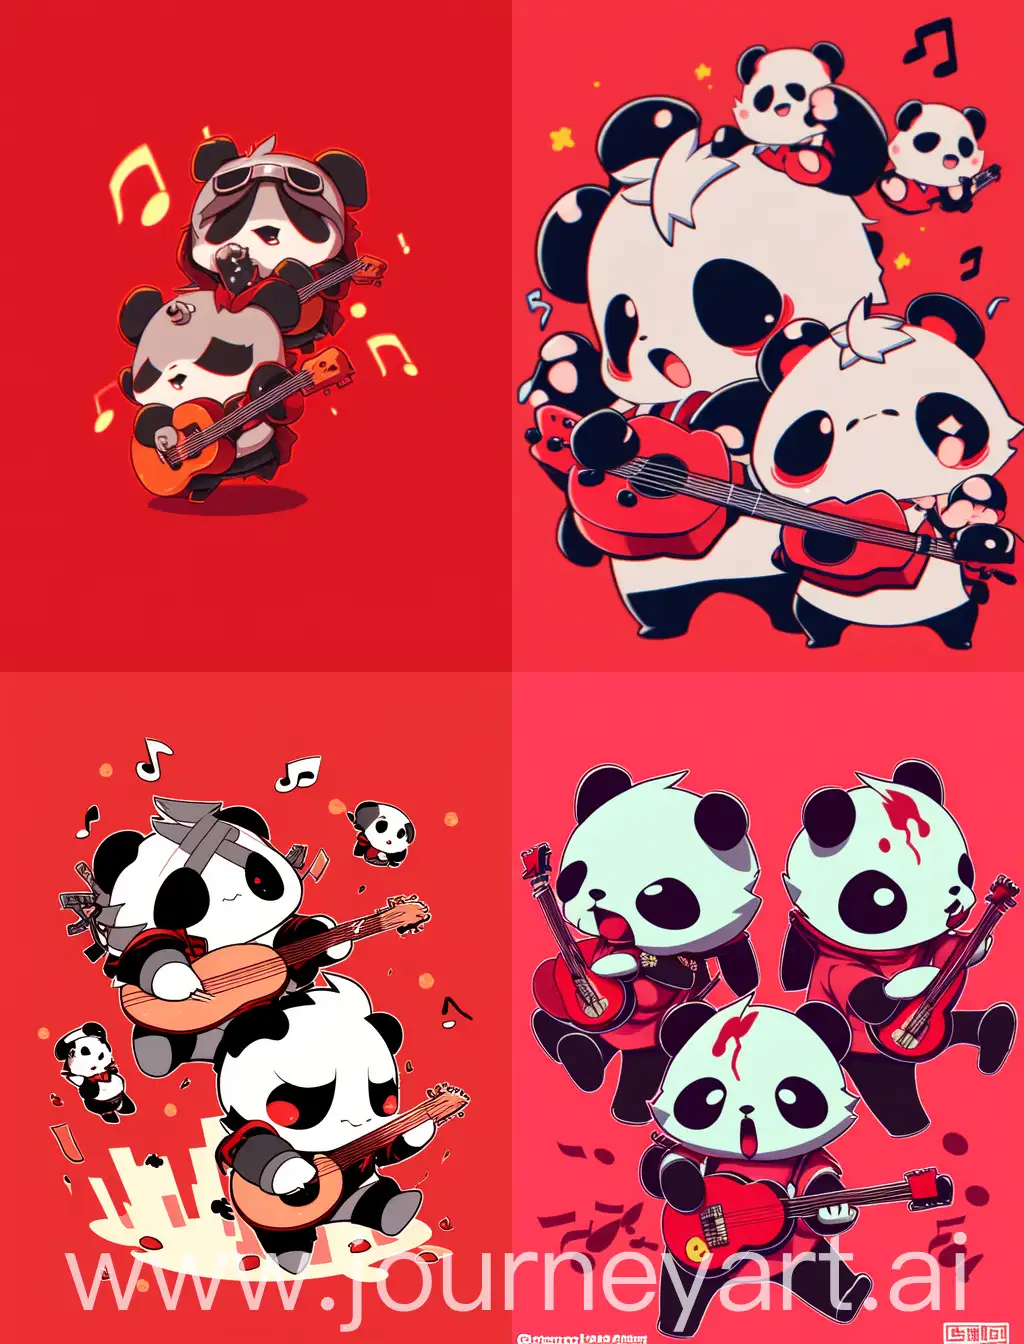 Chibi-Pandas-Playing-Guitar-on-Vibrant-Red-Background